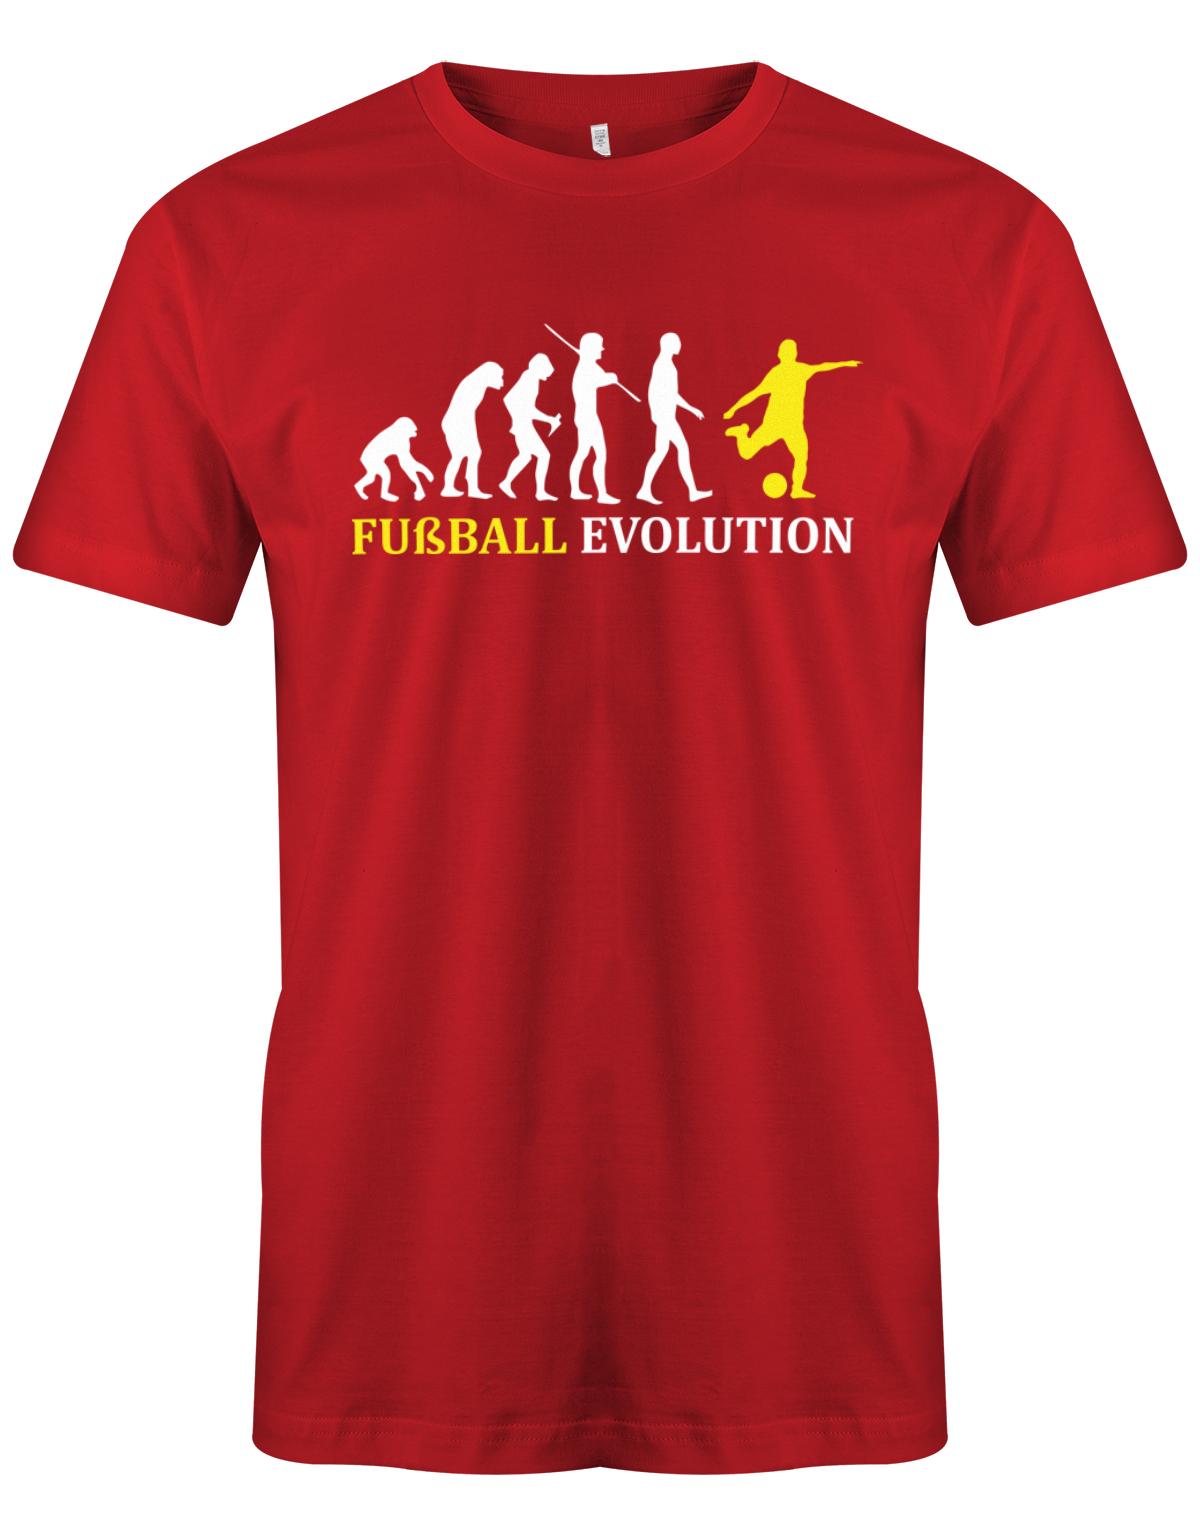 Fussball-Evolution-Herren-Shirt-Rot-Gelb